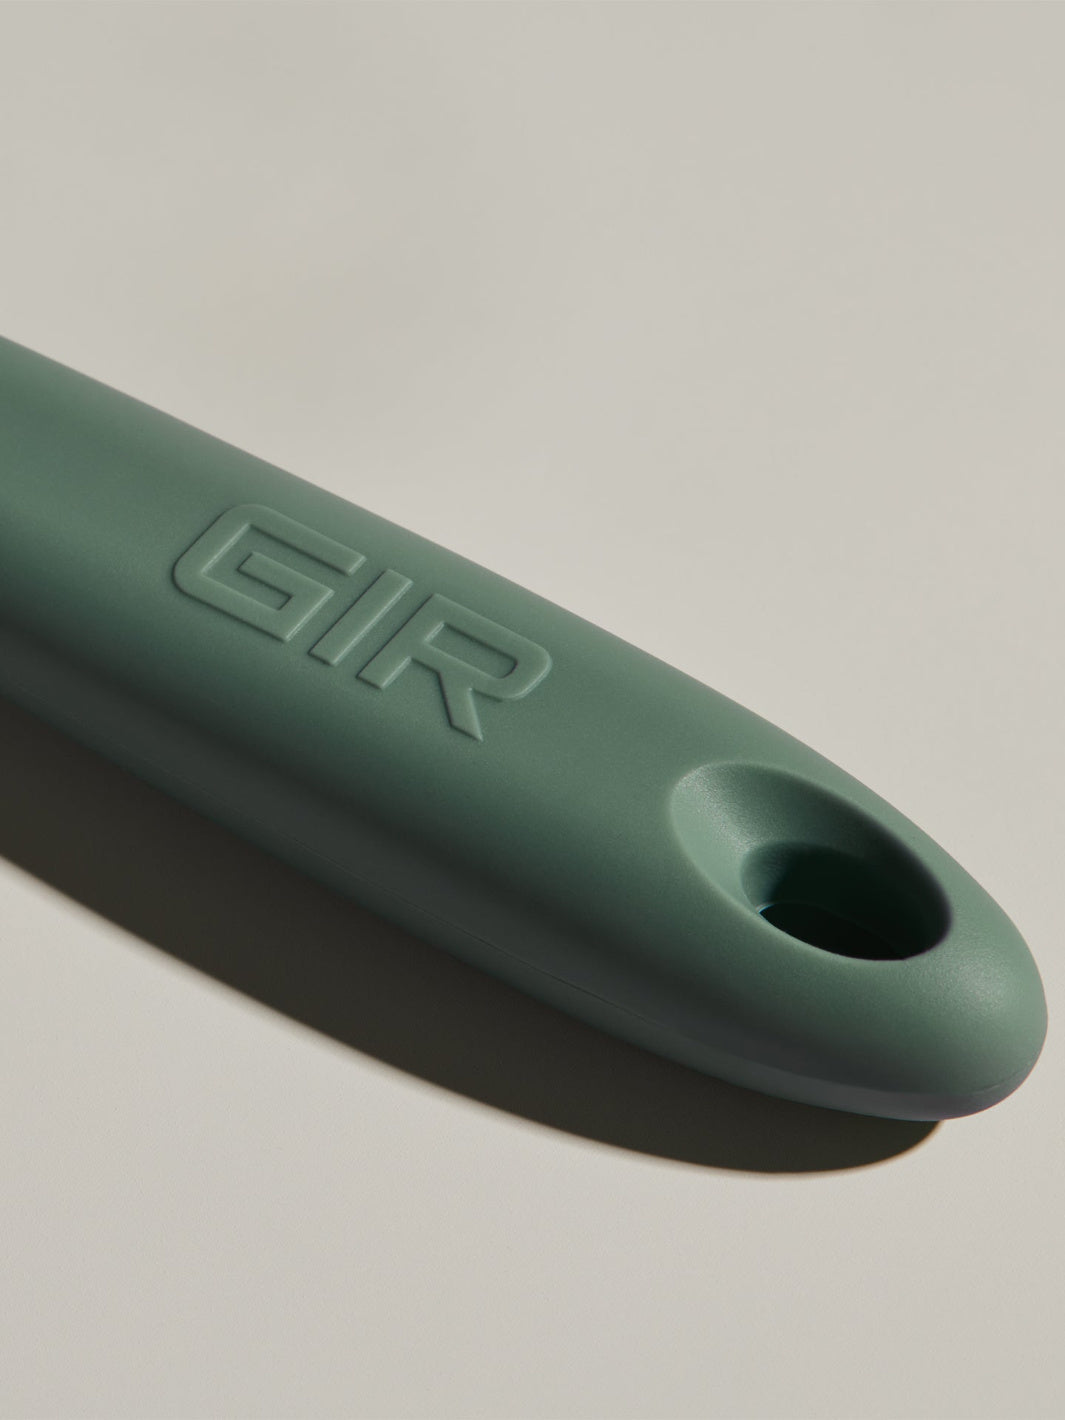 GIR Ultimate Spatula (279.4mm/11.0in)